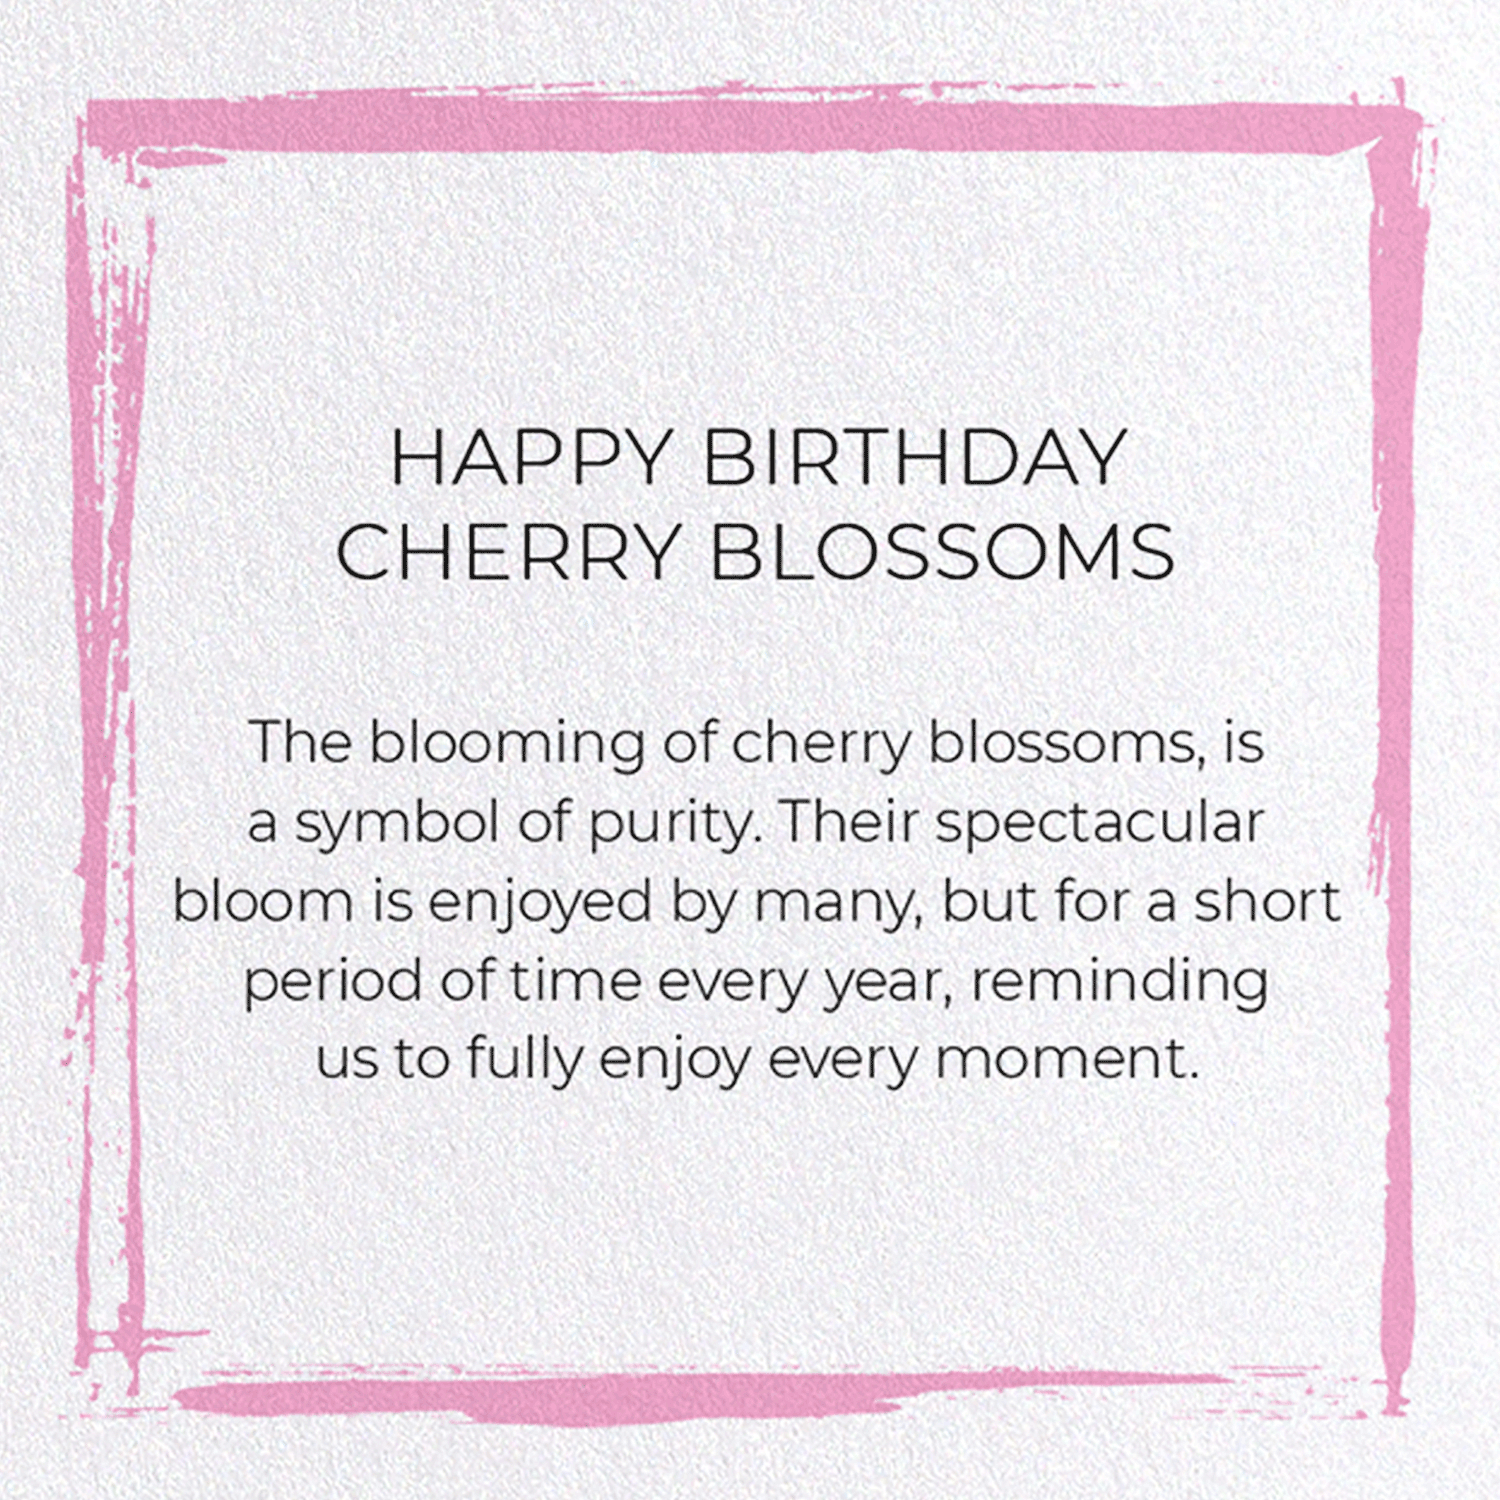 HAPPY BIRTHDAY CHERRY BLOSSOMS